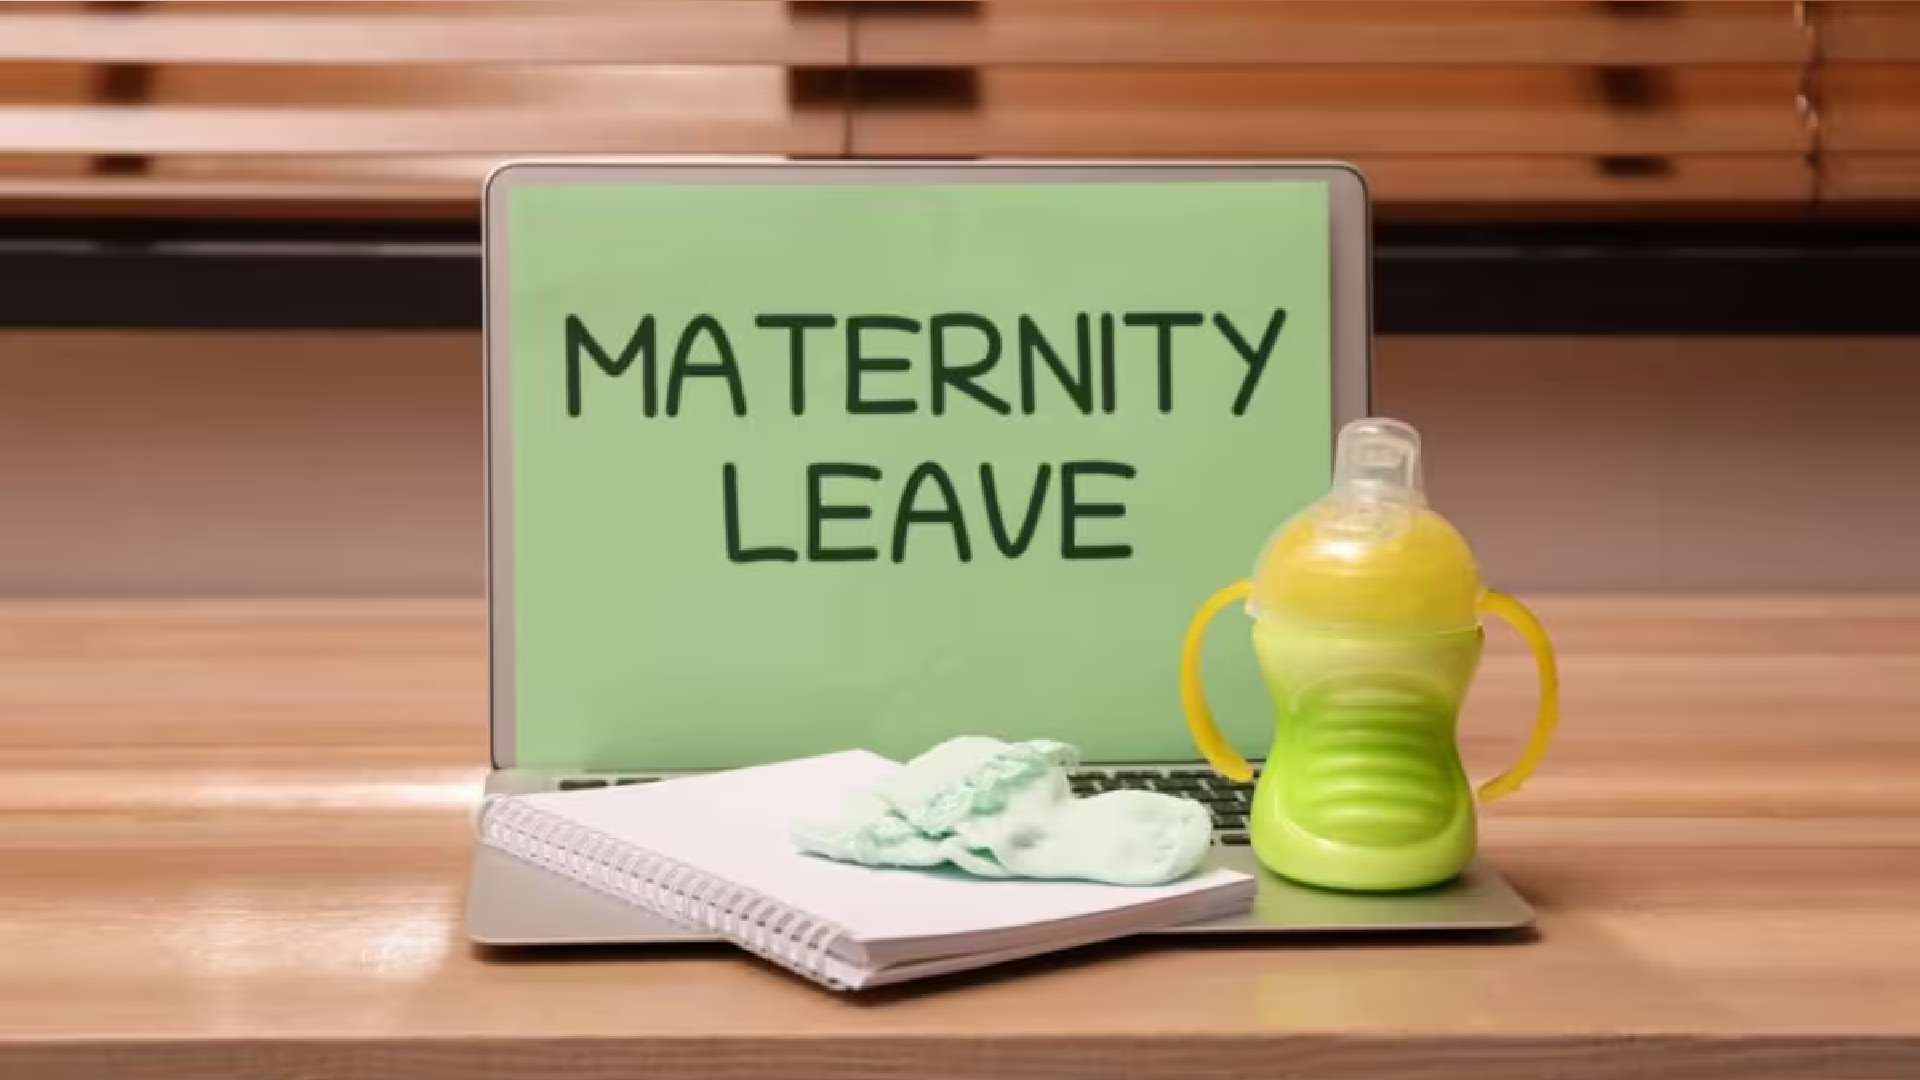 maternity leave in UAE